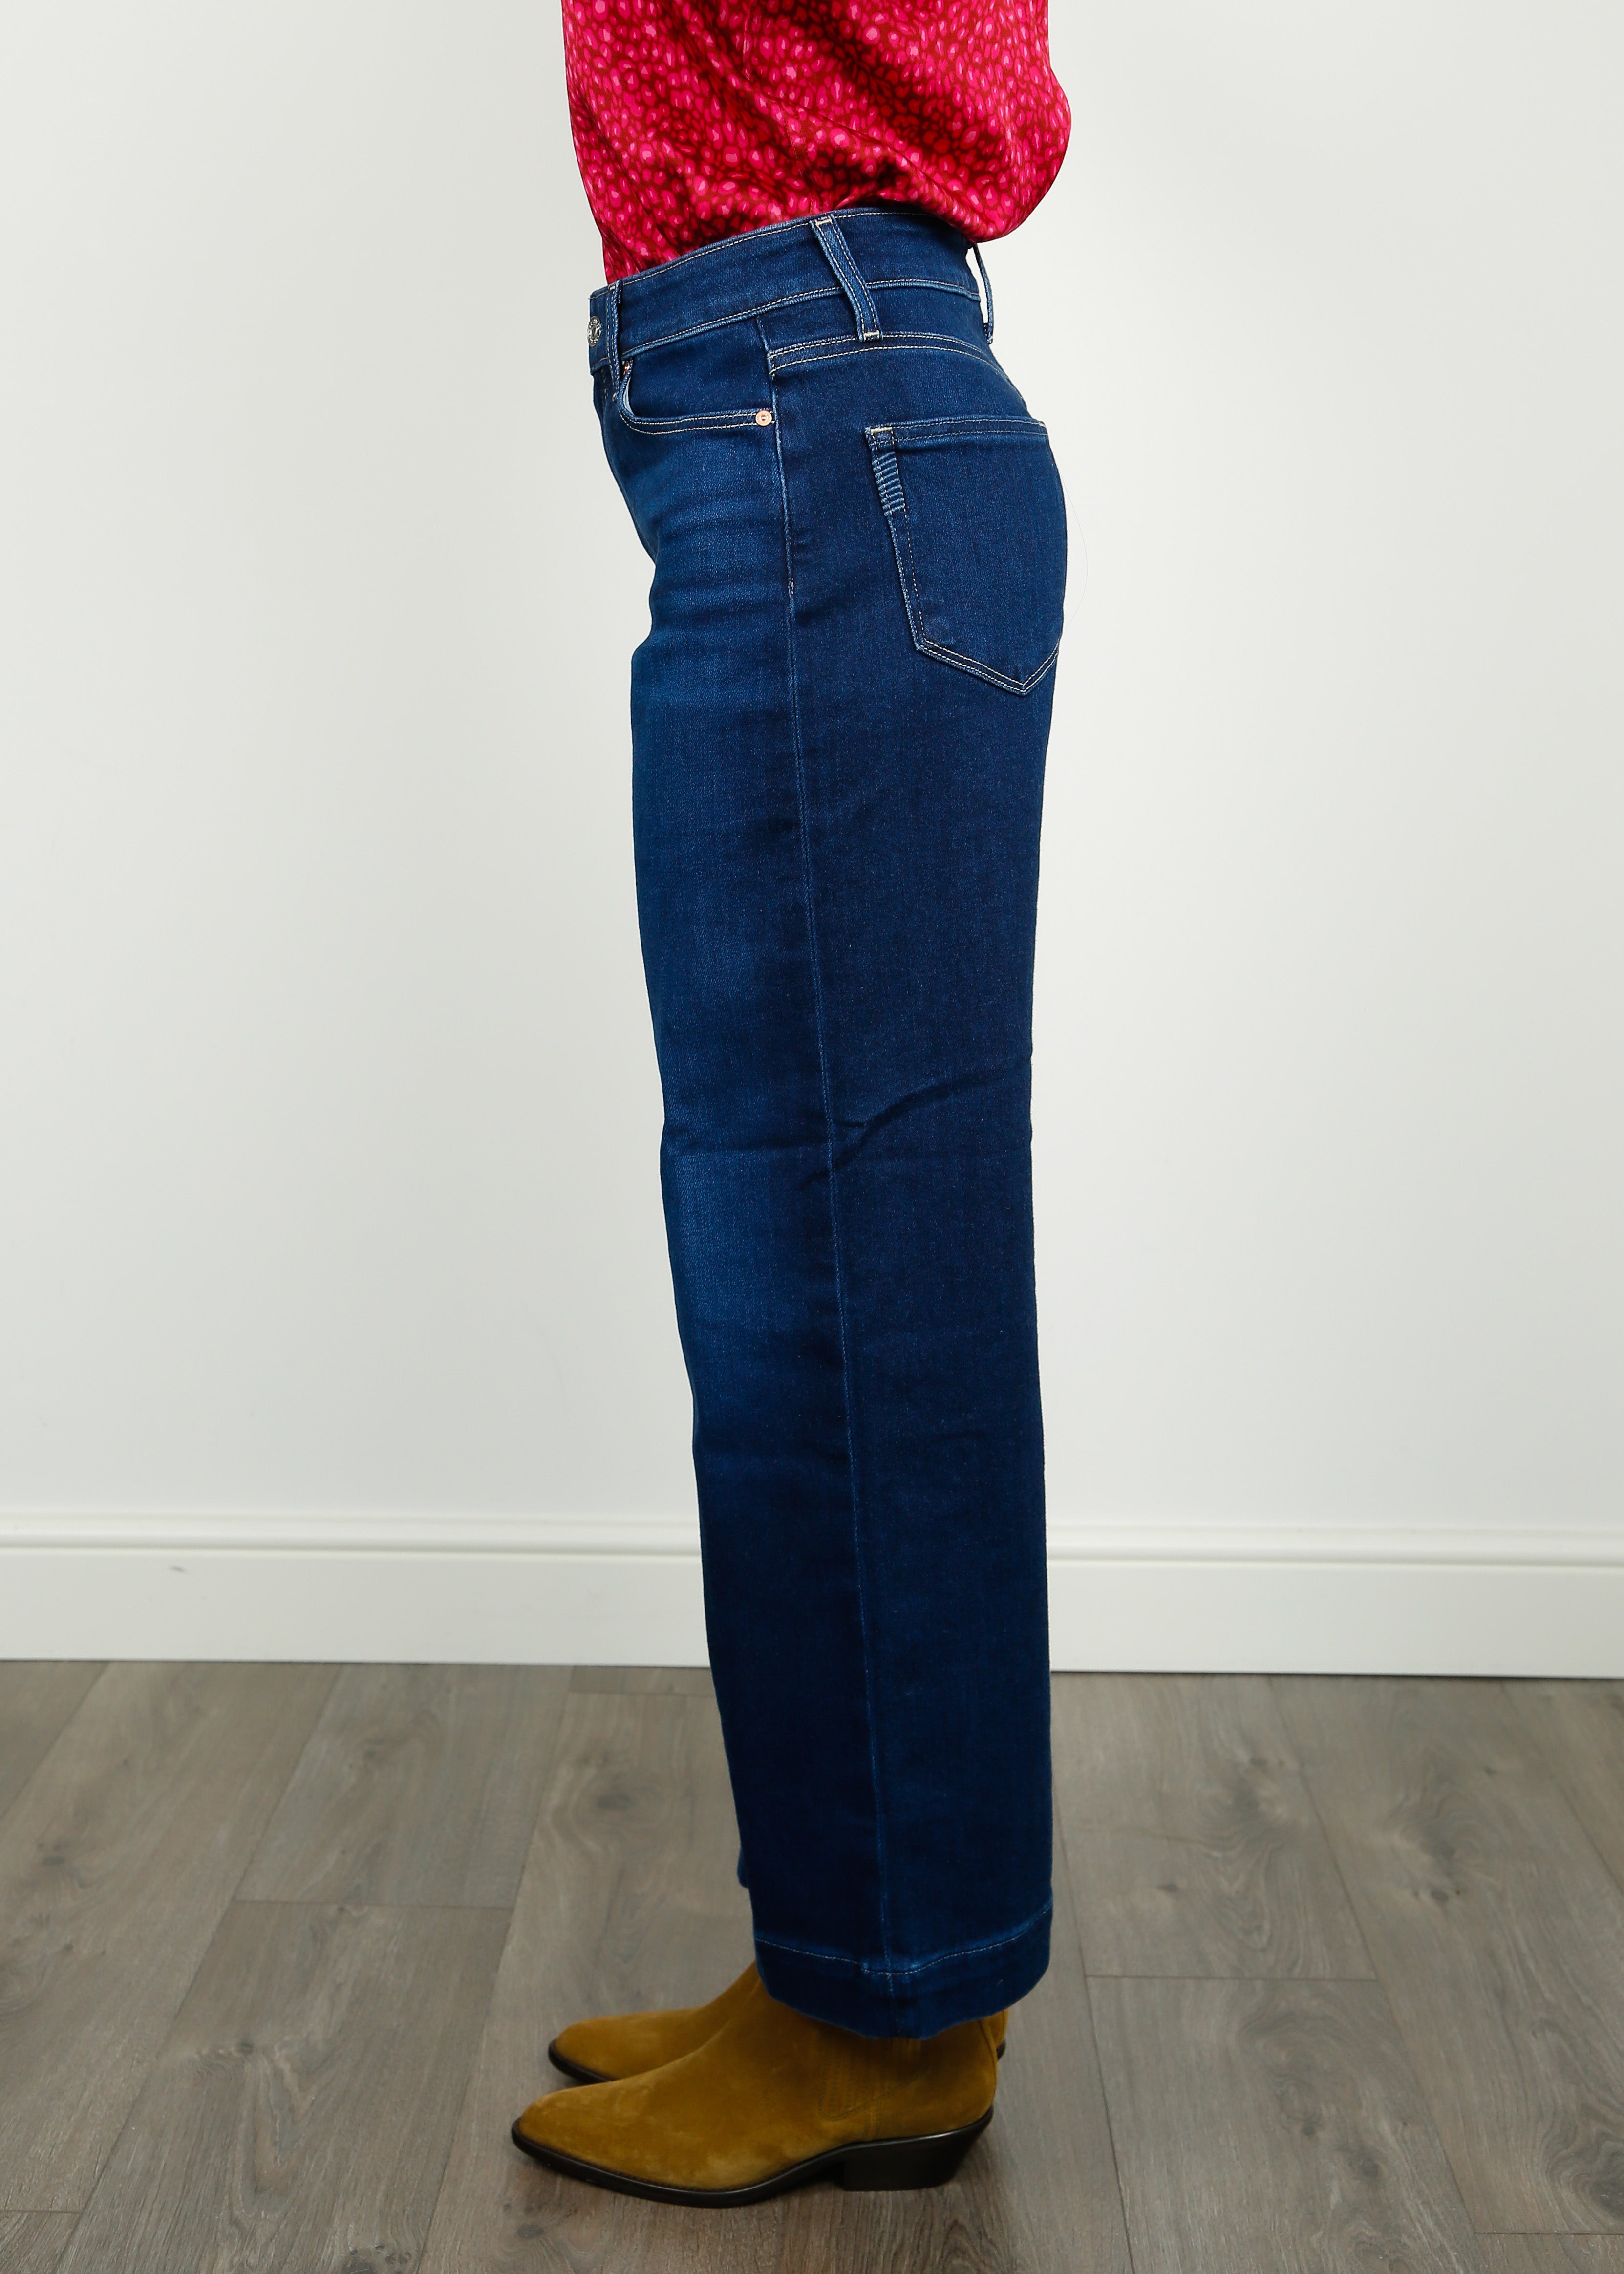 PAIGE Anessa Jeans in Dream Weaver